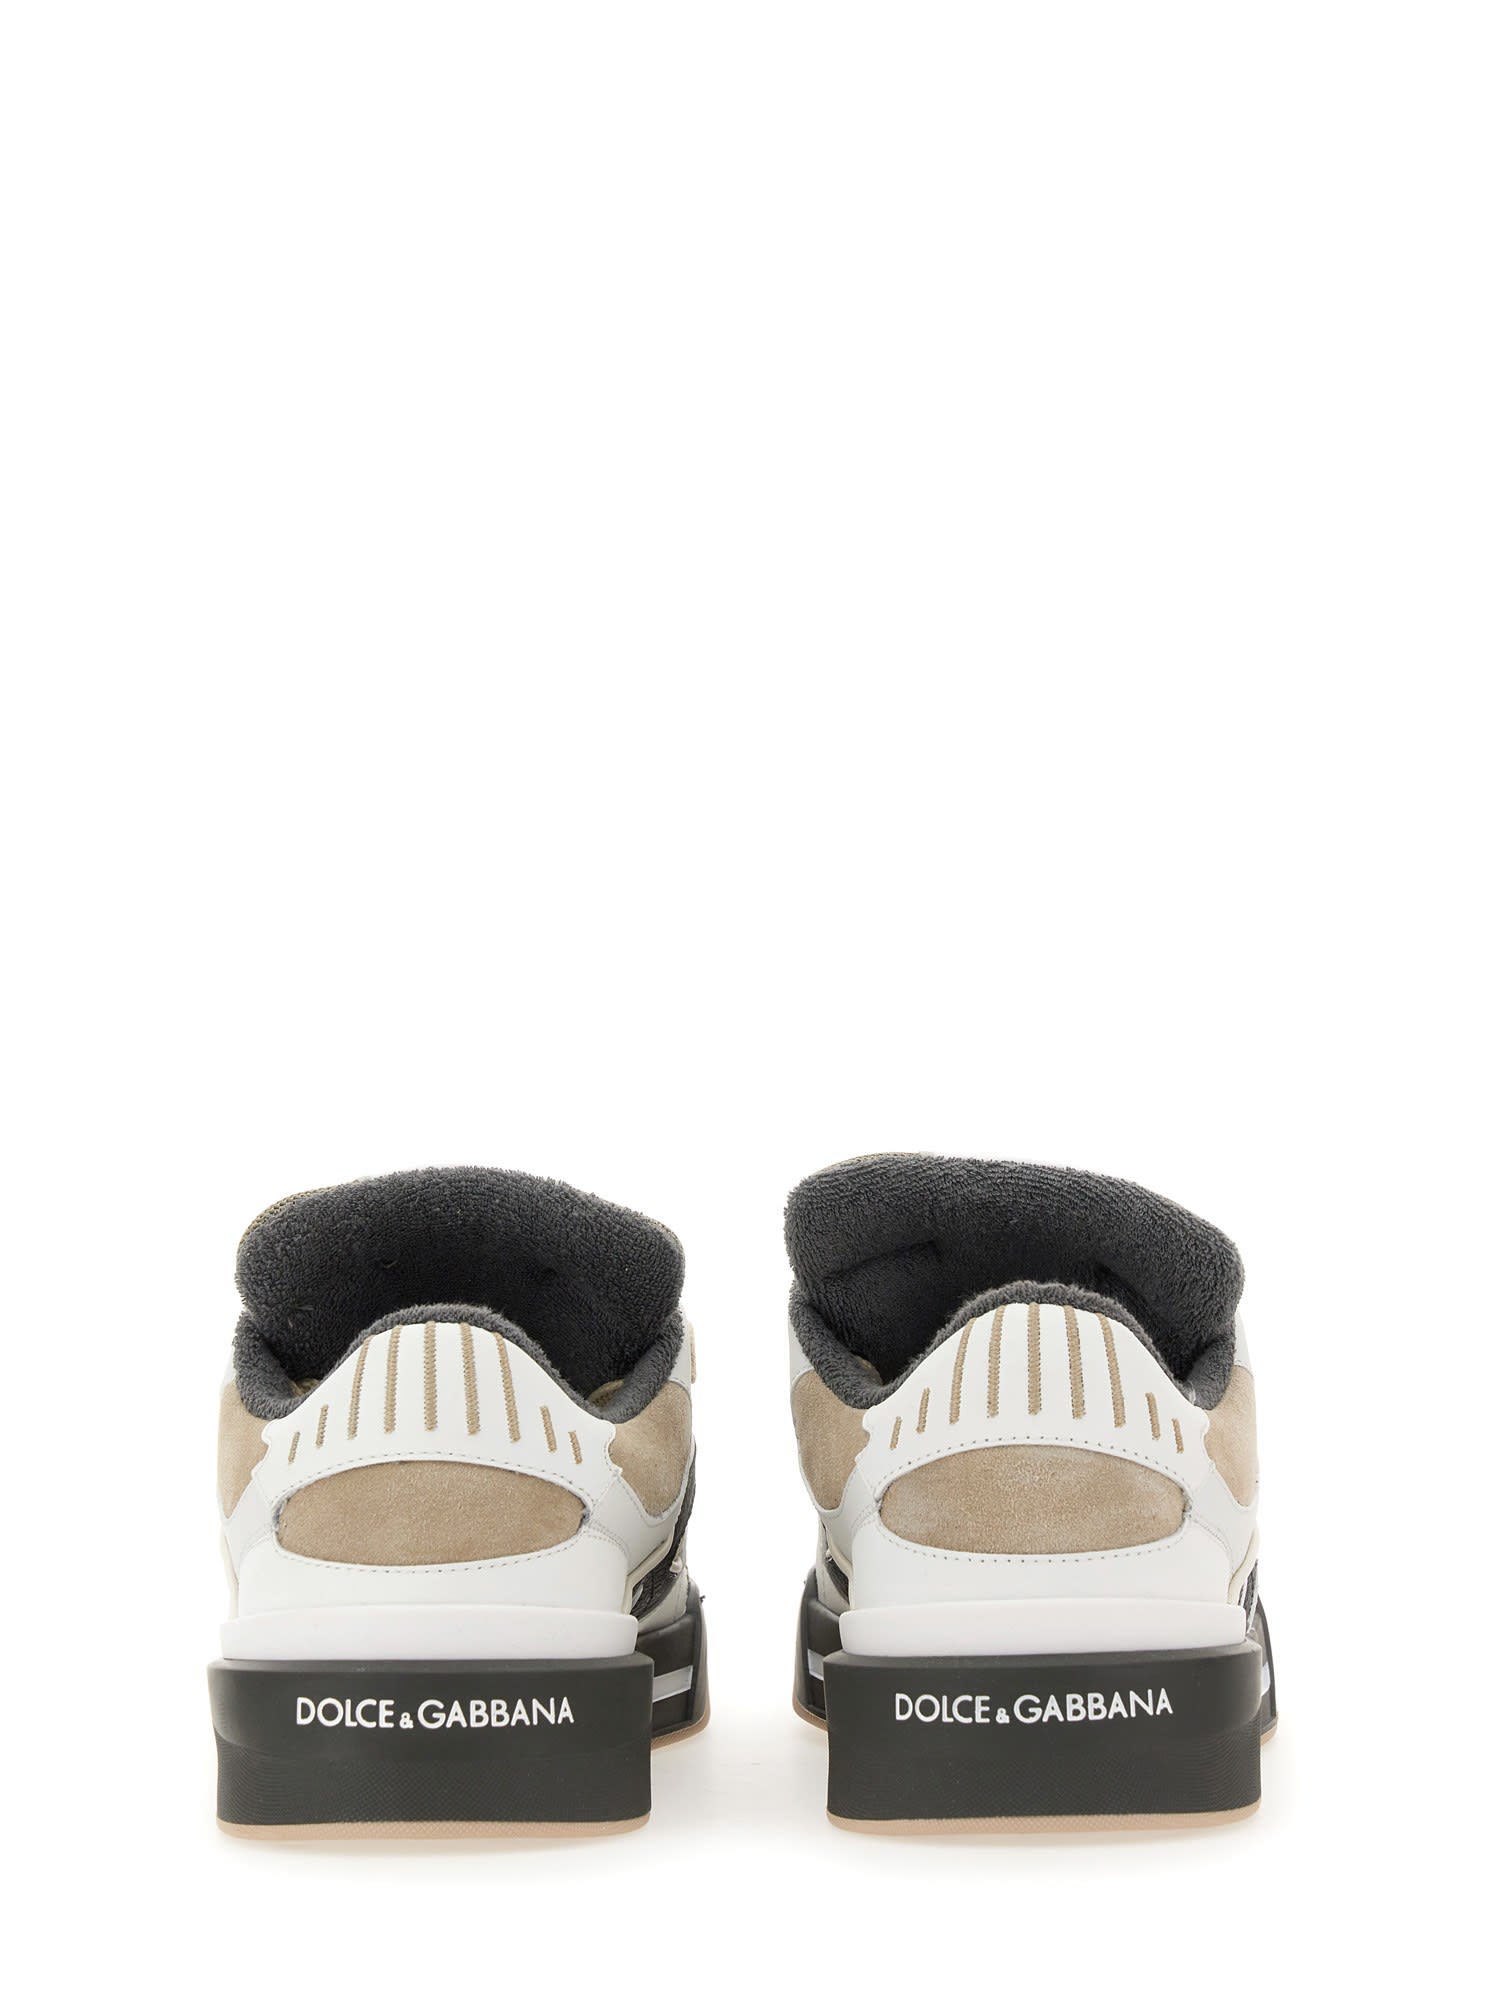 Shop Dolce & Gabbana Sneaker New Rome In Tortora